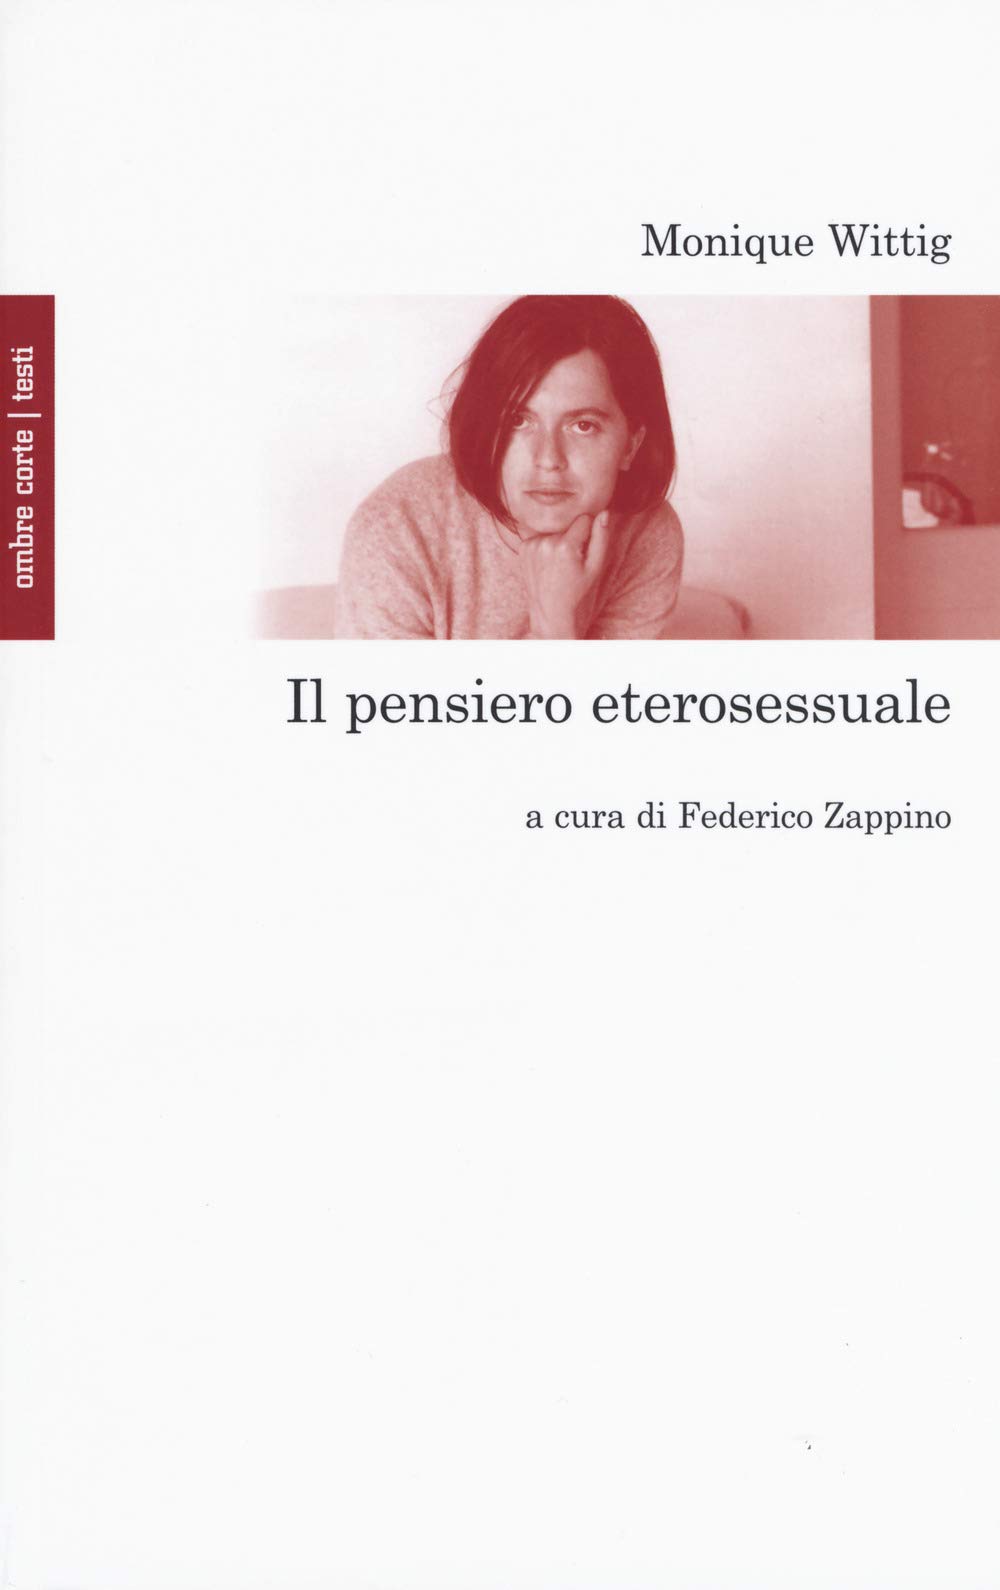 Monique Wittig: Il pensiero eterosessuale (Paperback, Italiano language, 2019, Ombre Corte)